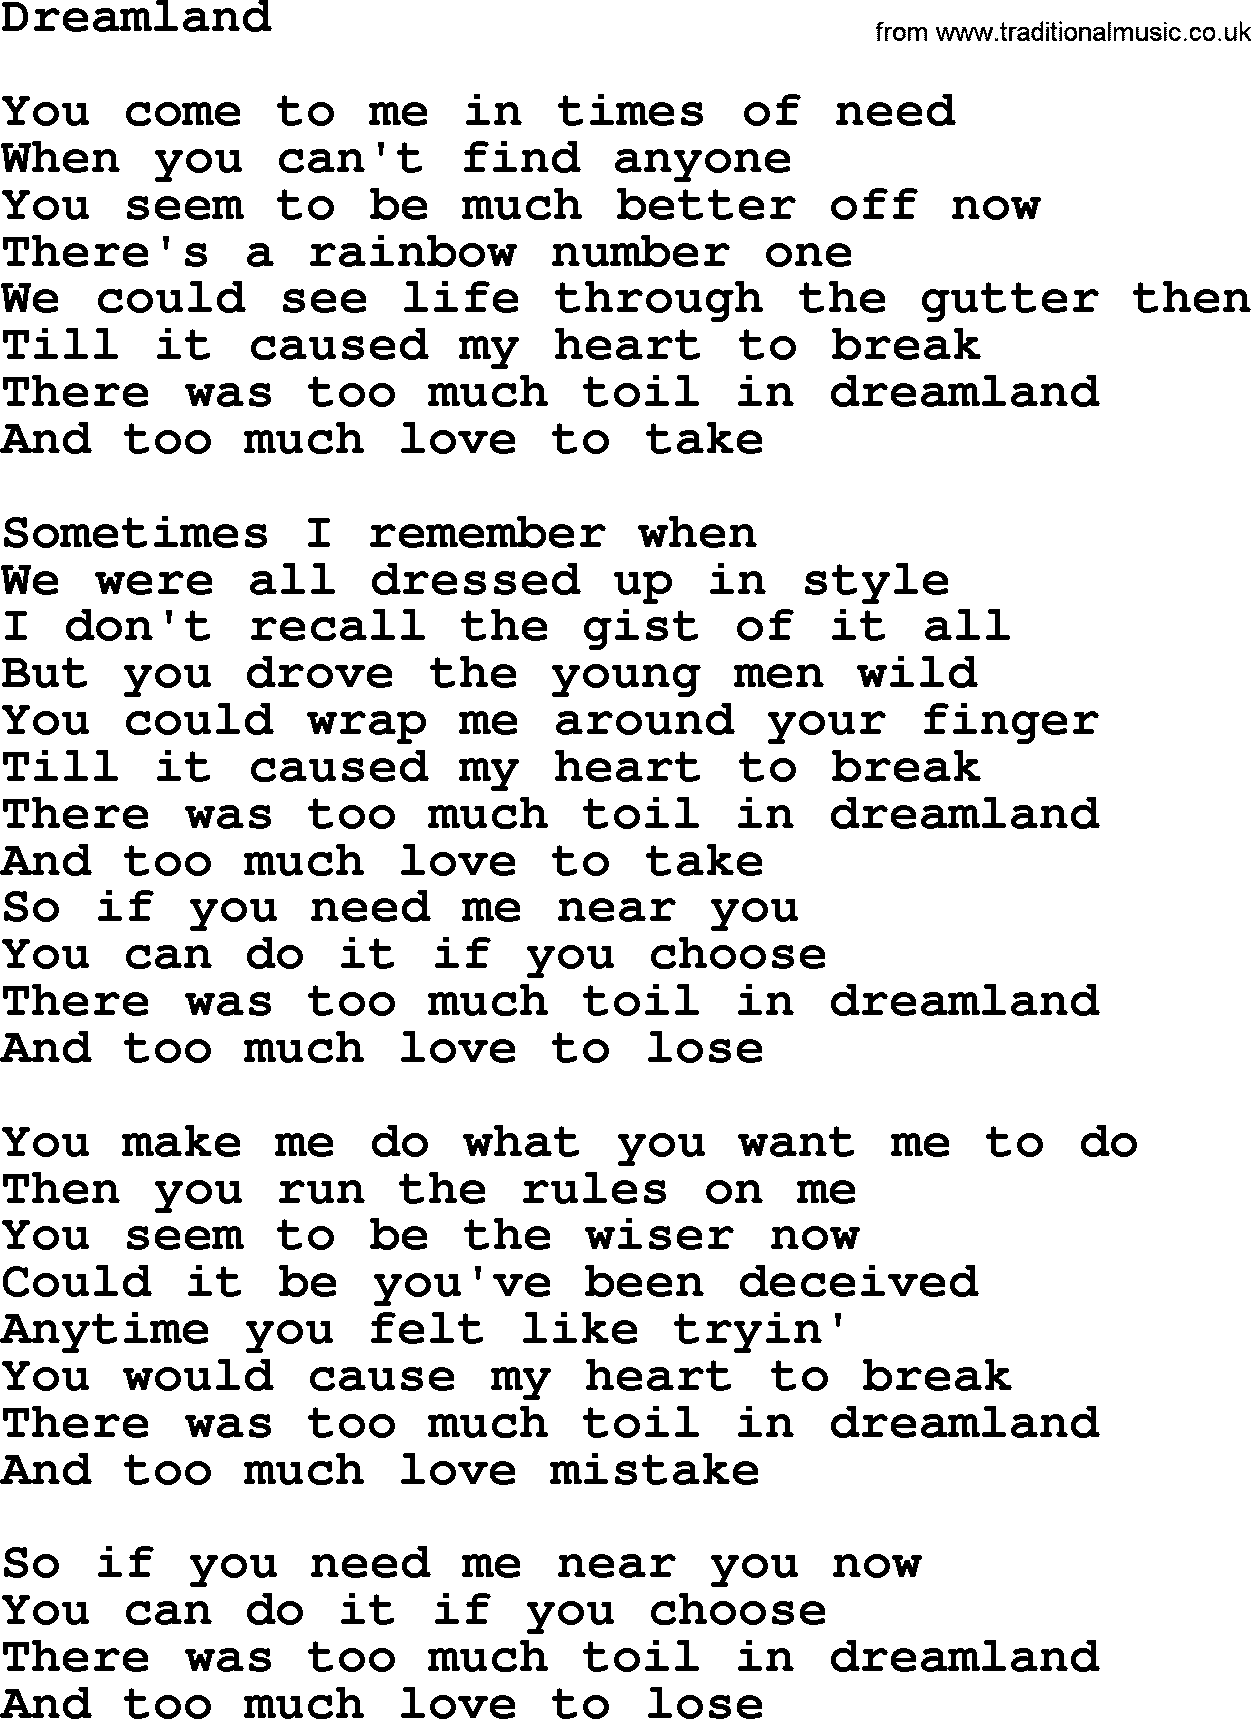 Gordon Lightfoot song Dreamland, lyrics